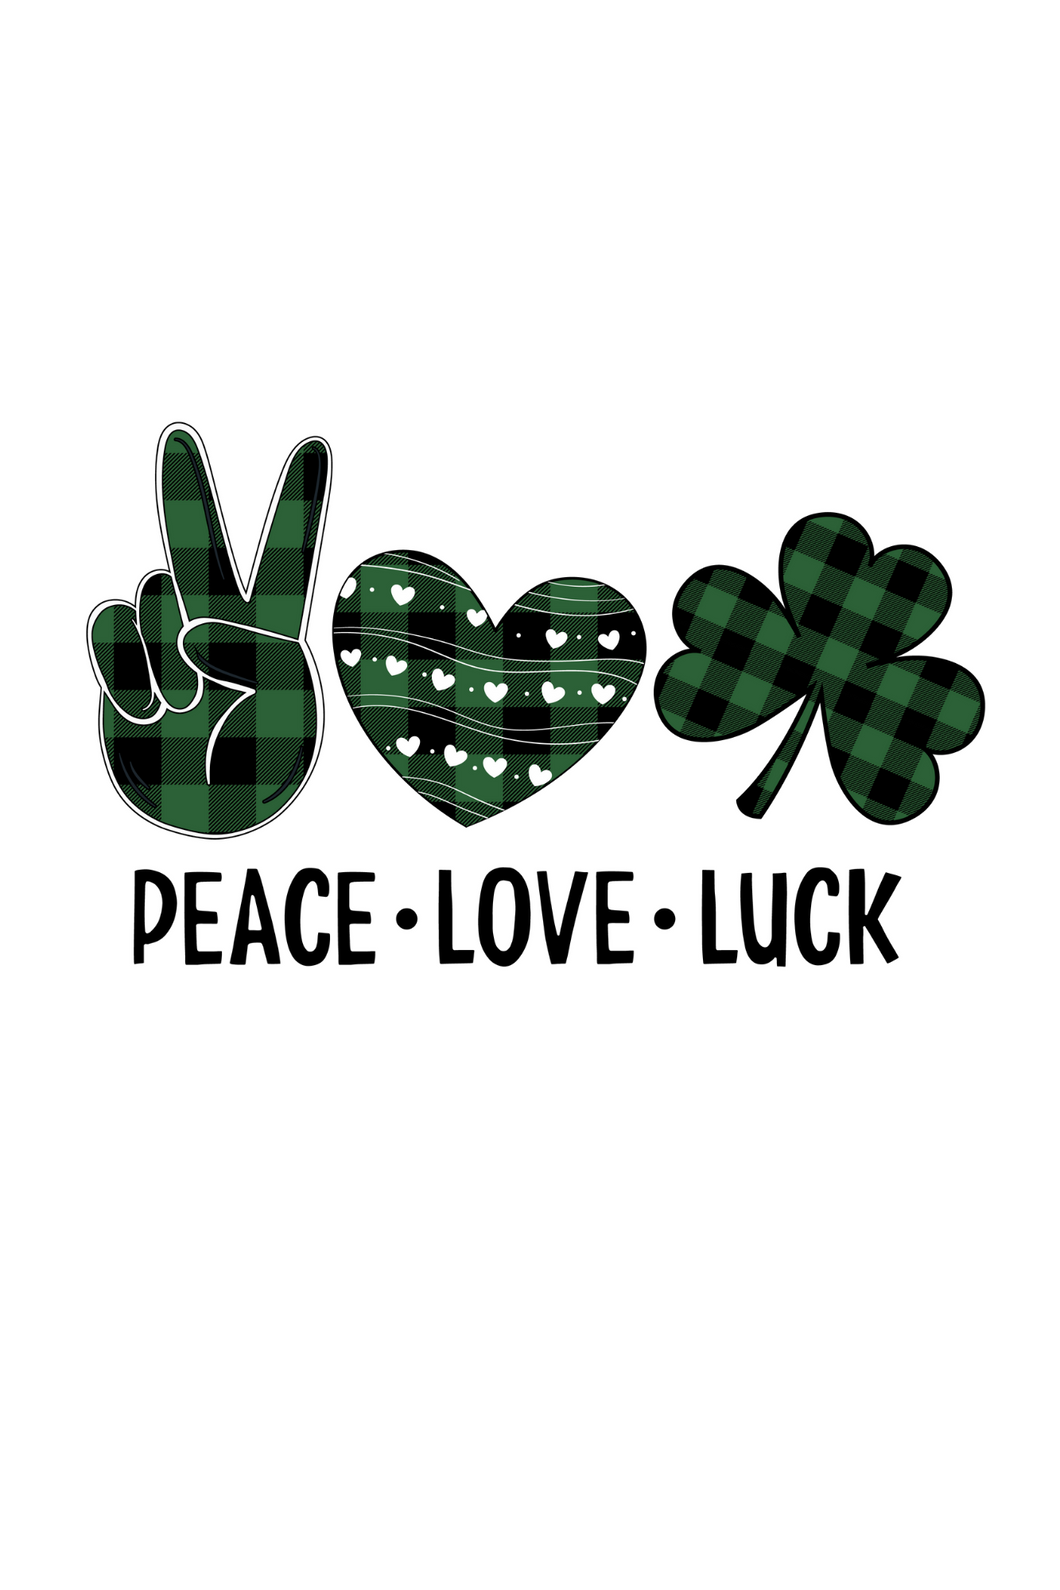 Ready to Press OKI Transfer- Peace. Love. Luck